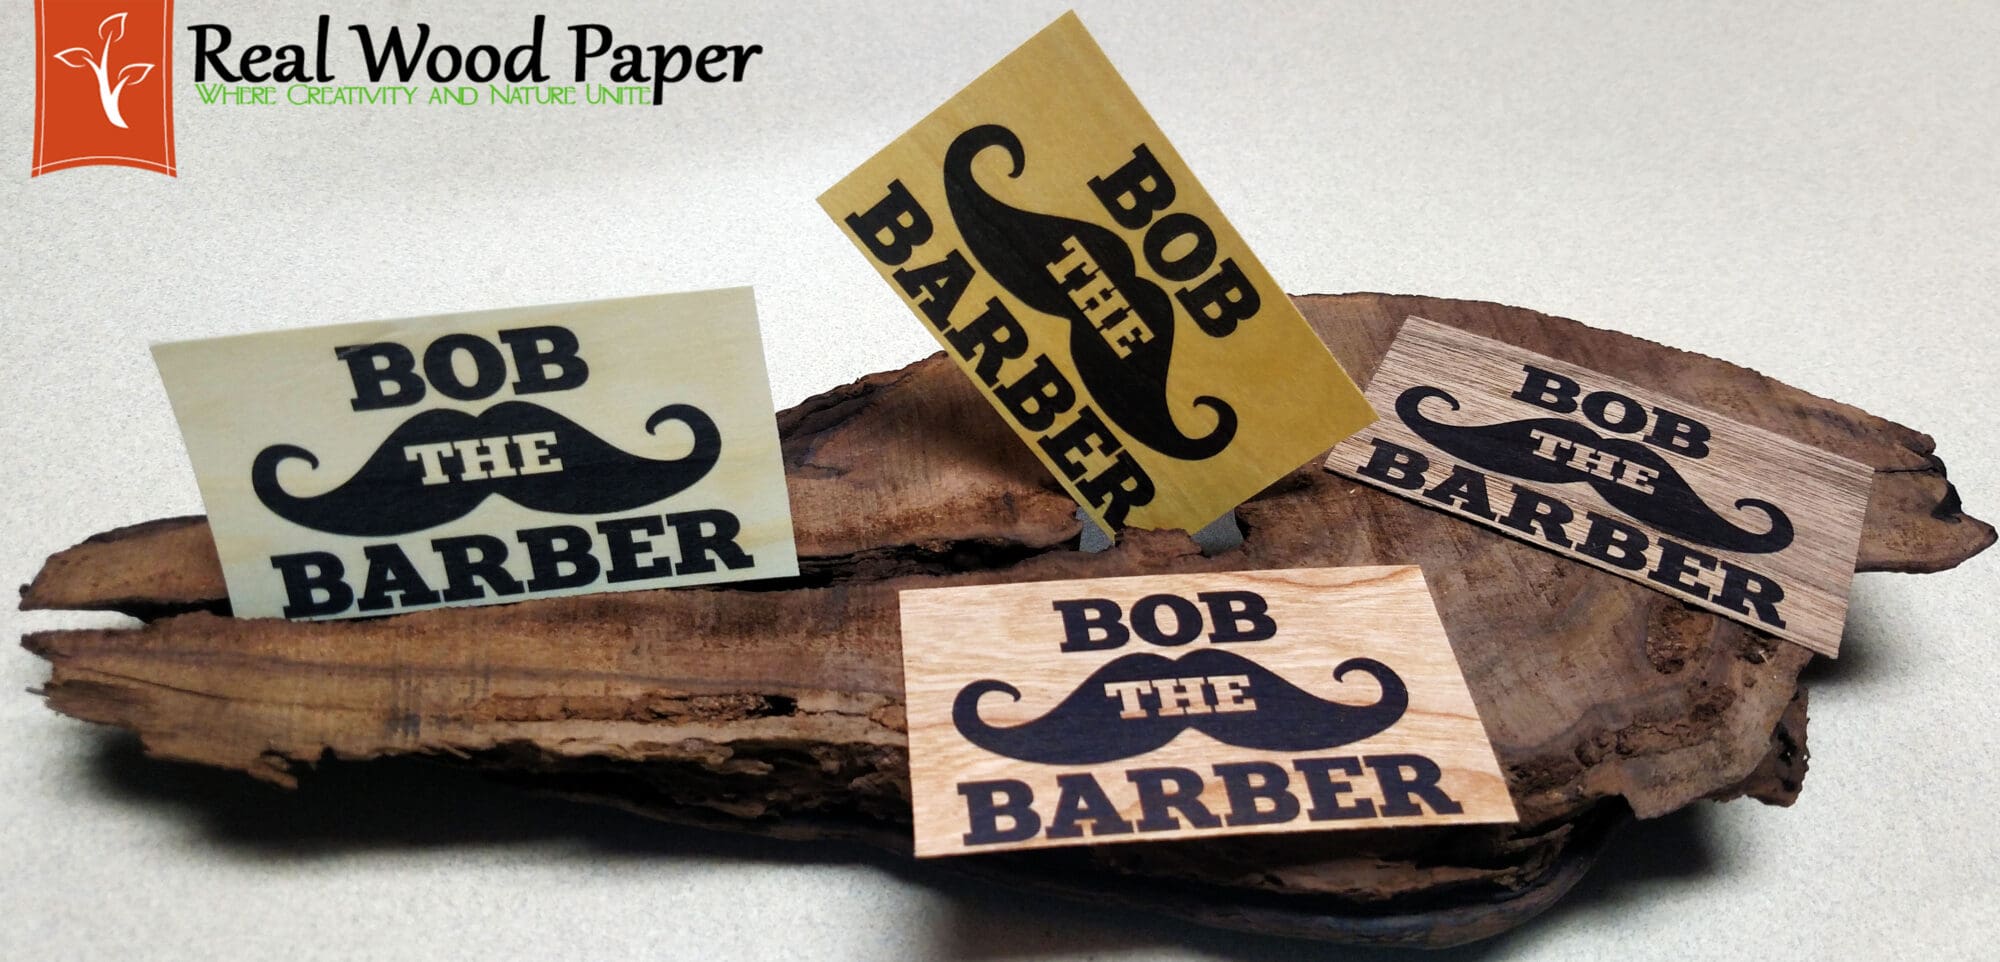 Real Wood Paper DIY Printed Business Cards